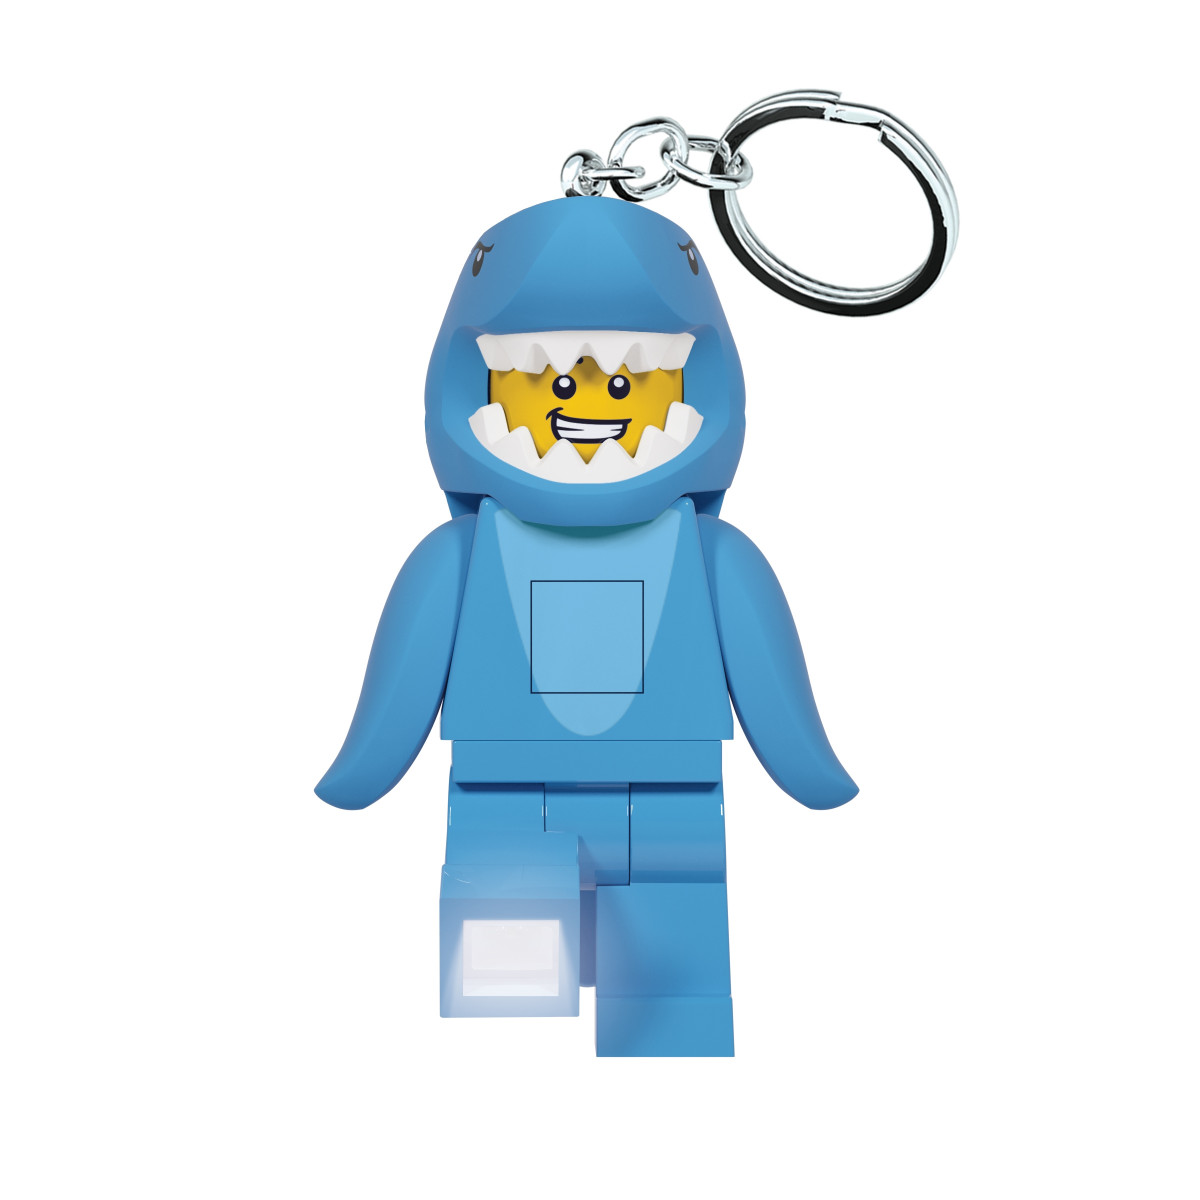 Lego LGL-KE155H - Torcia portachiavi dell’Uomo squalo